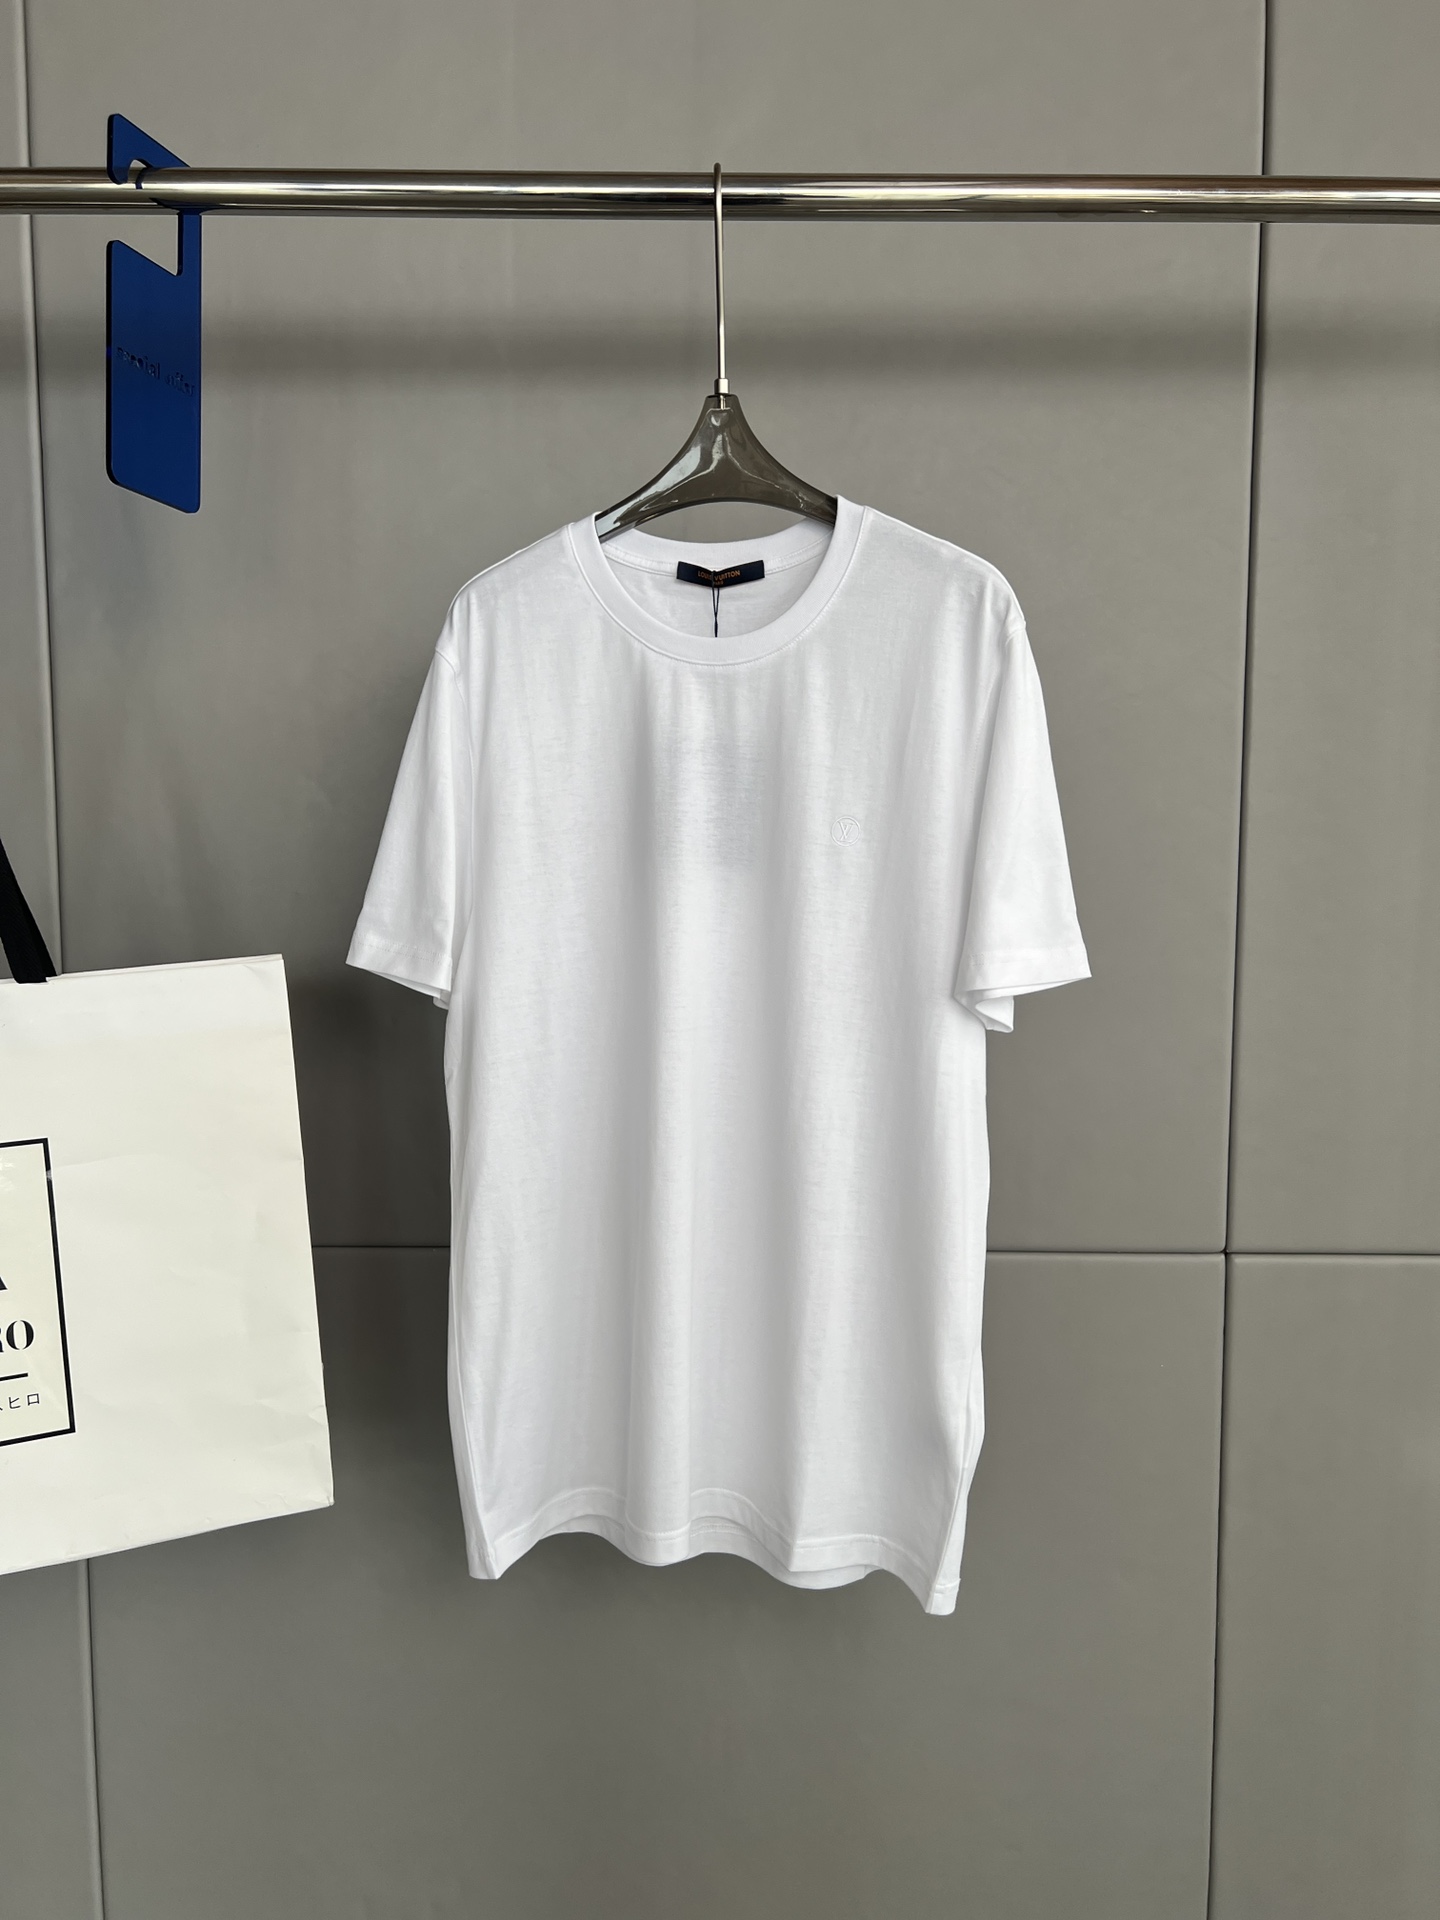 Louis Vuitto*n LV 路易威登 夏季新款 男士刺绣圆领短袖T恤、胸前品牌标志性刺绣、100%纯棉、面料舒适码数S- XL